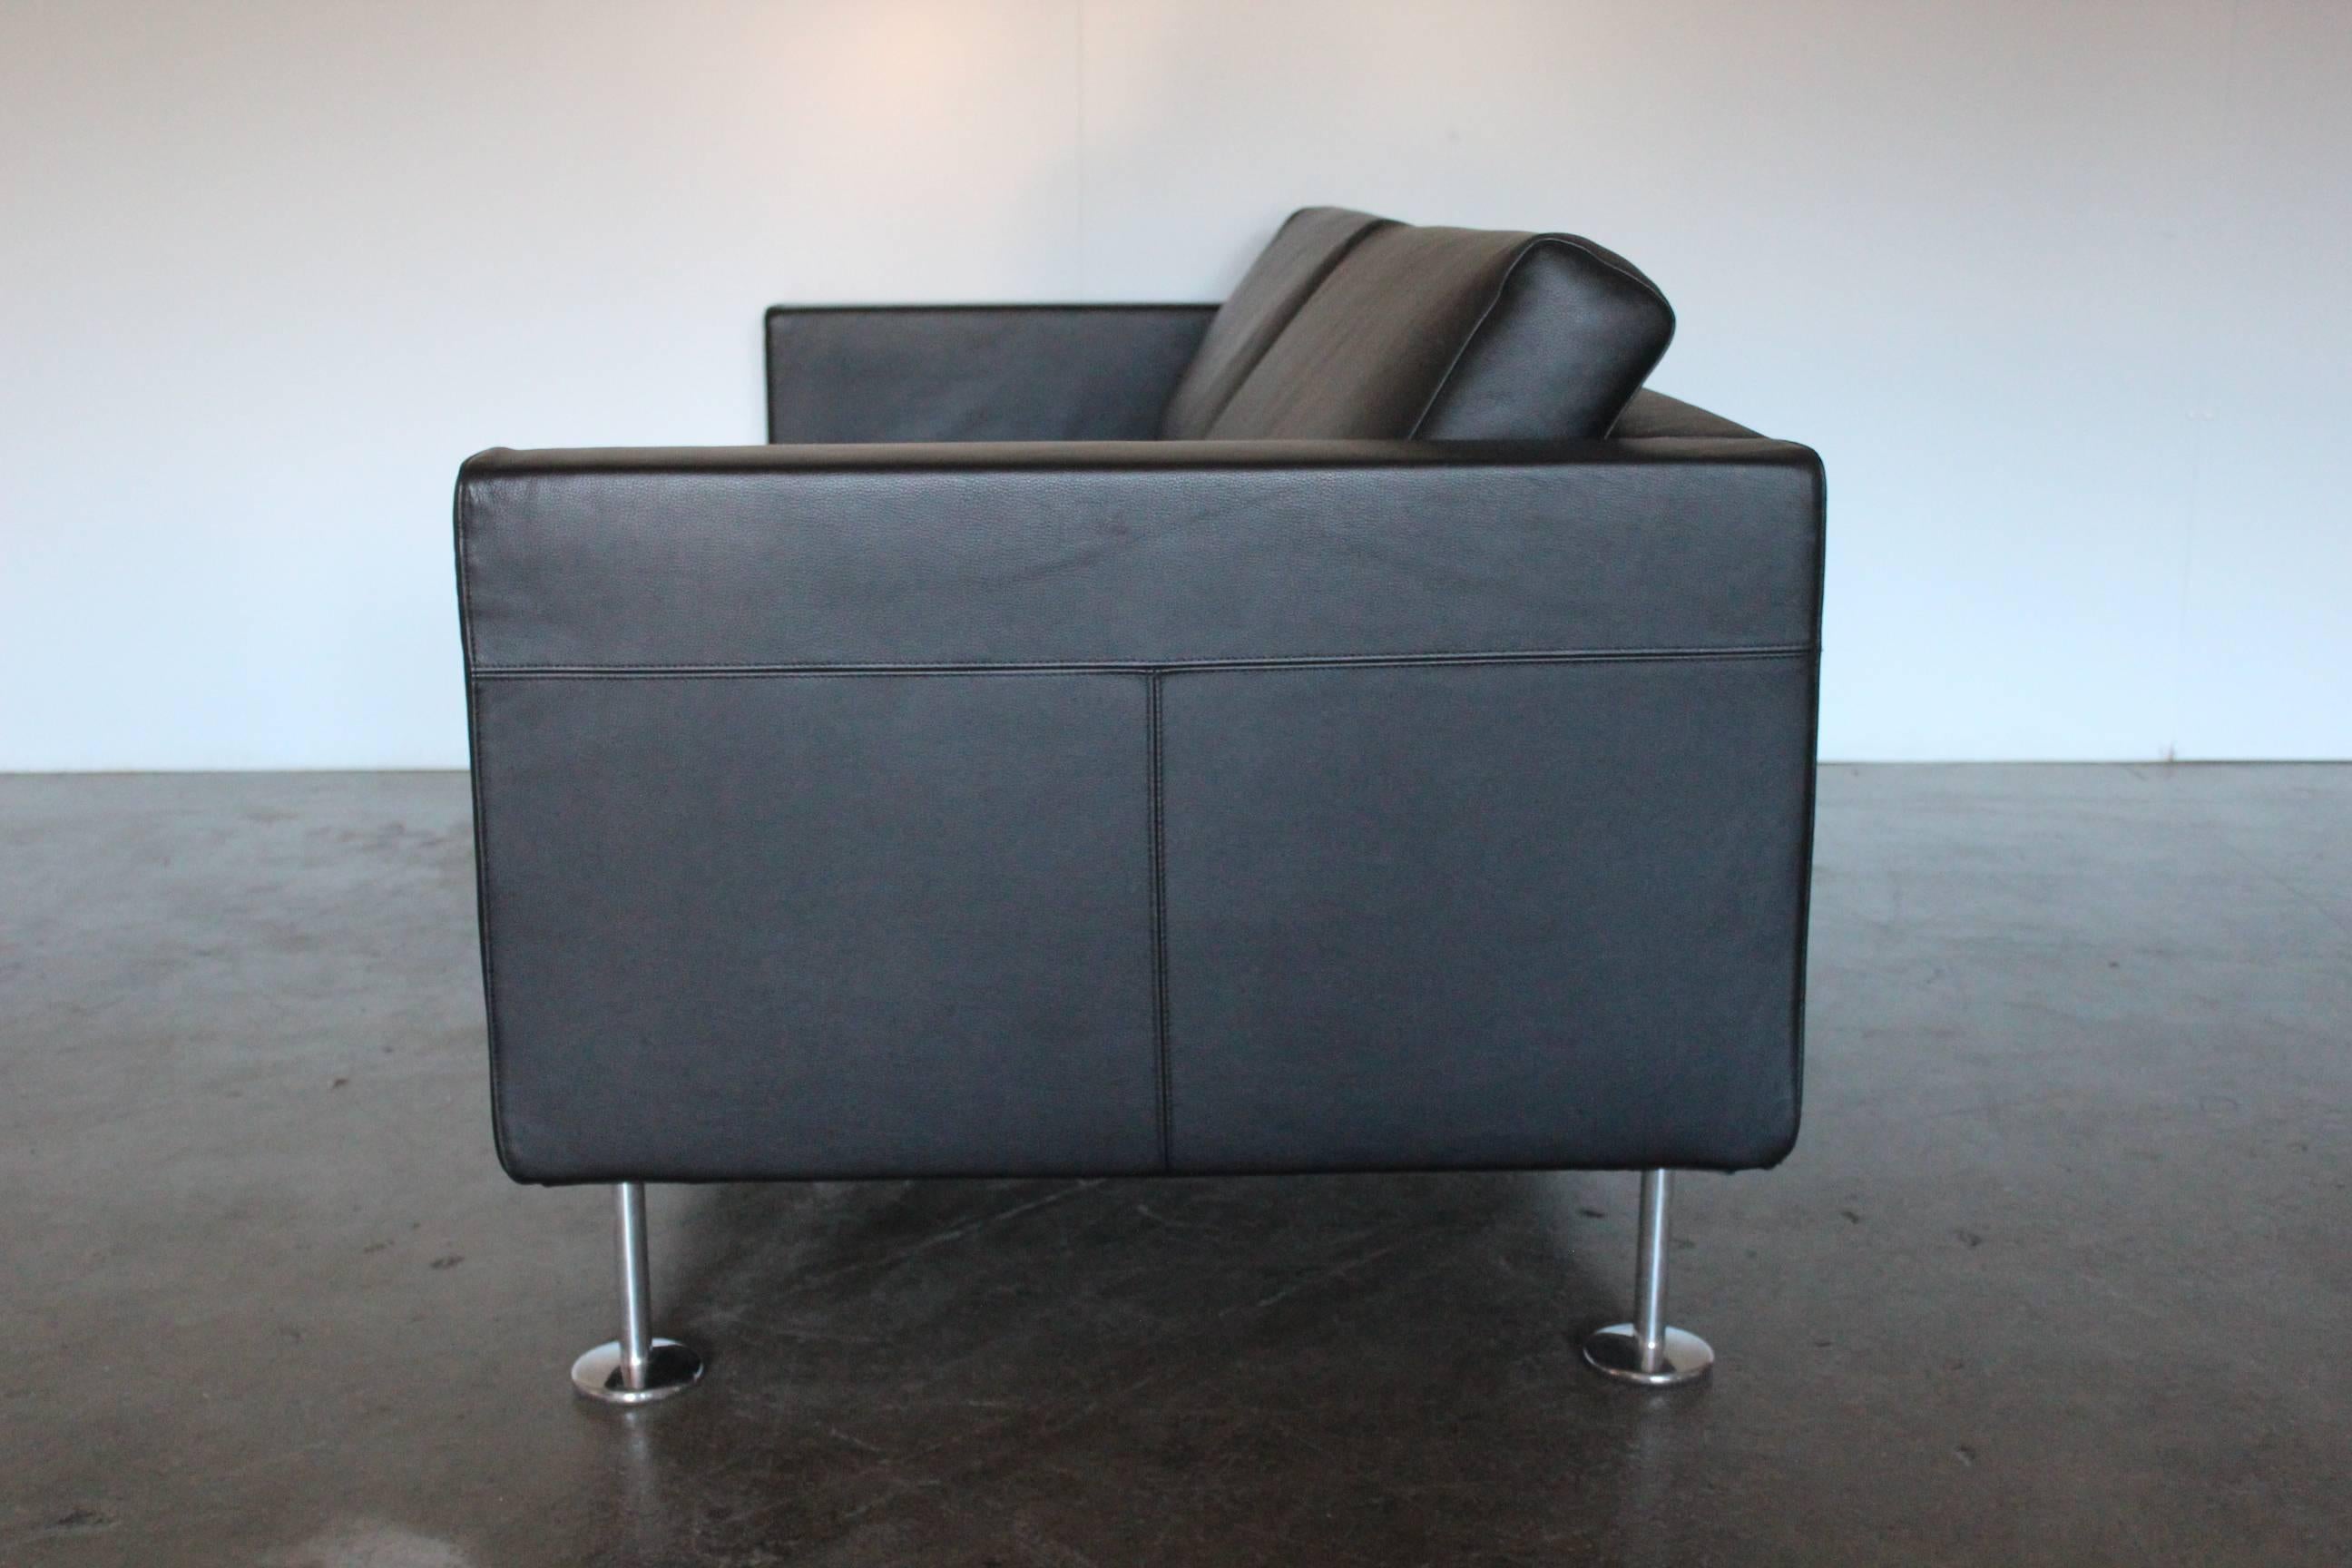 Modern Vitra “Park” Three-Seat Sofa in Jet Black Leather by Jasper Morrison